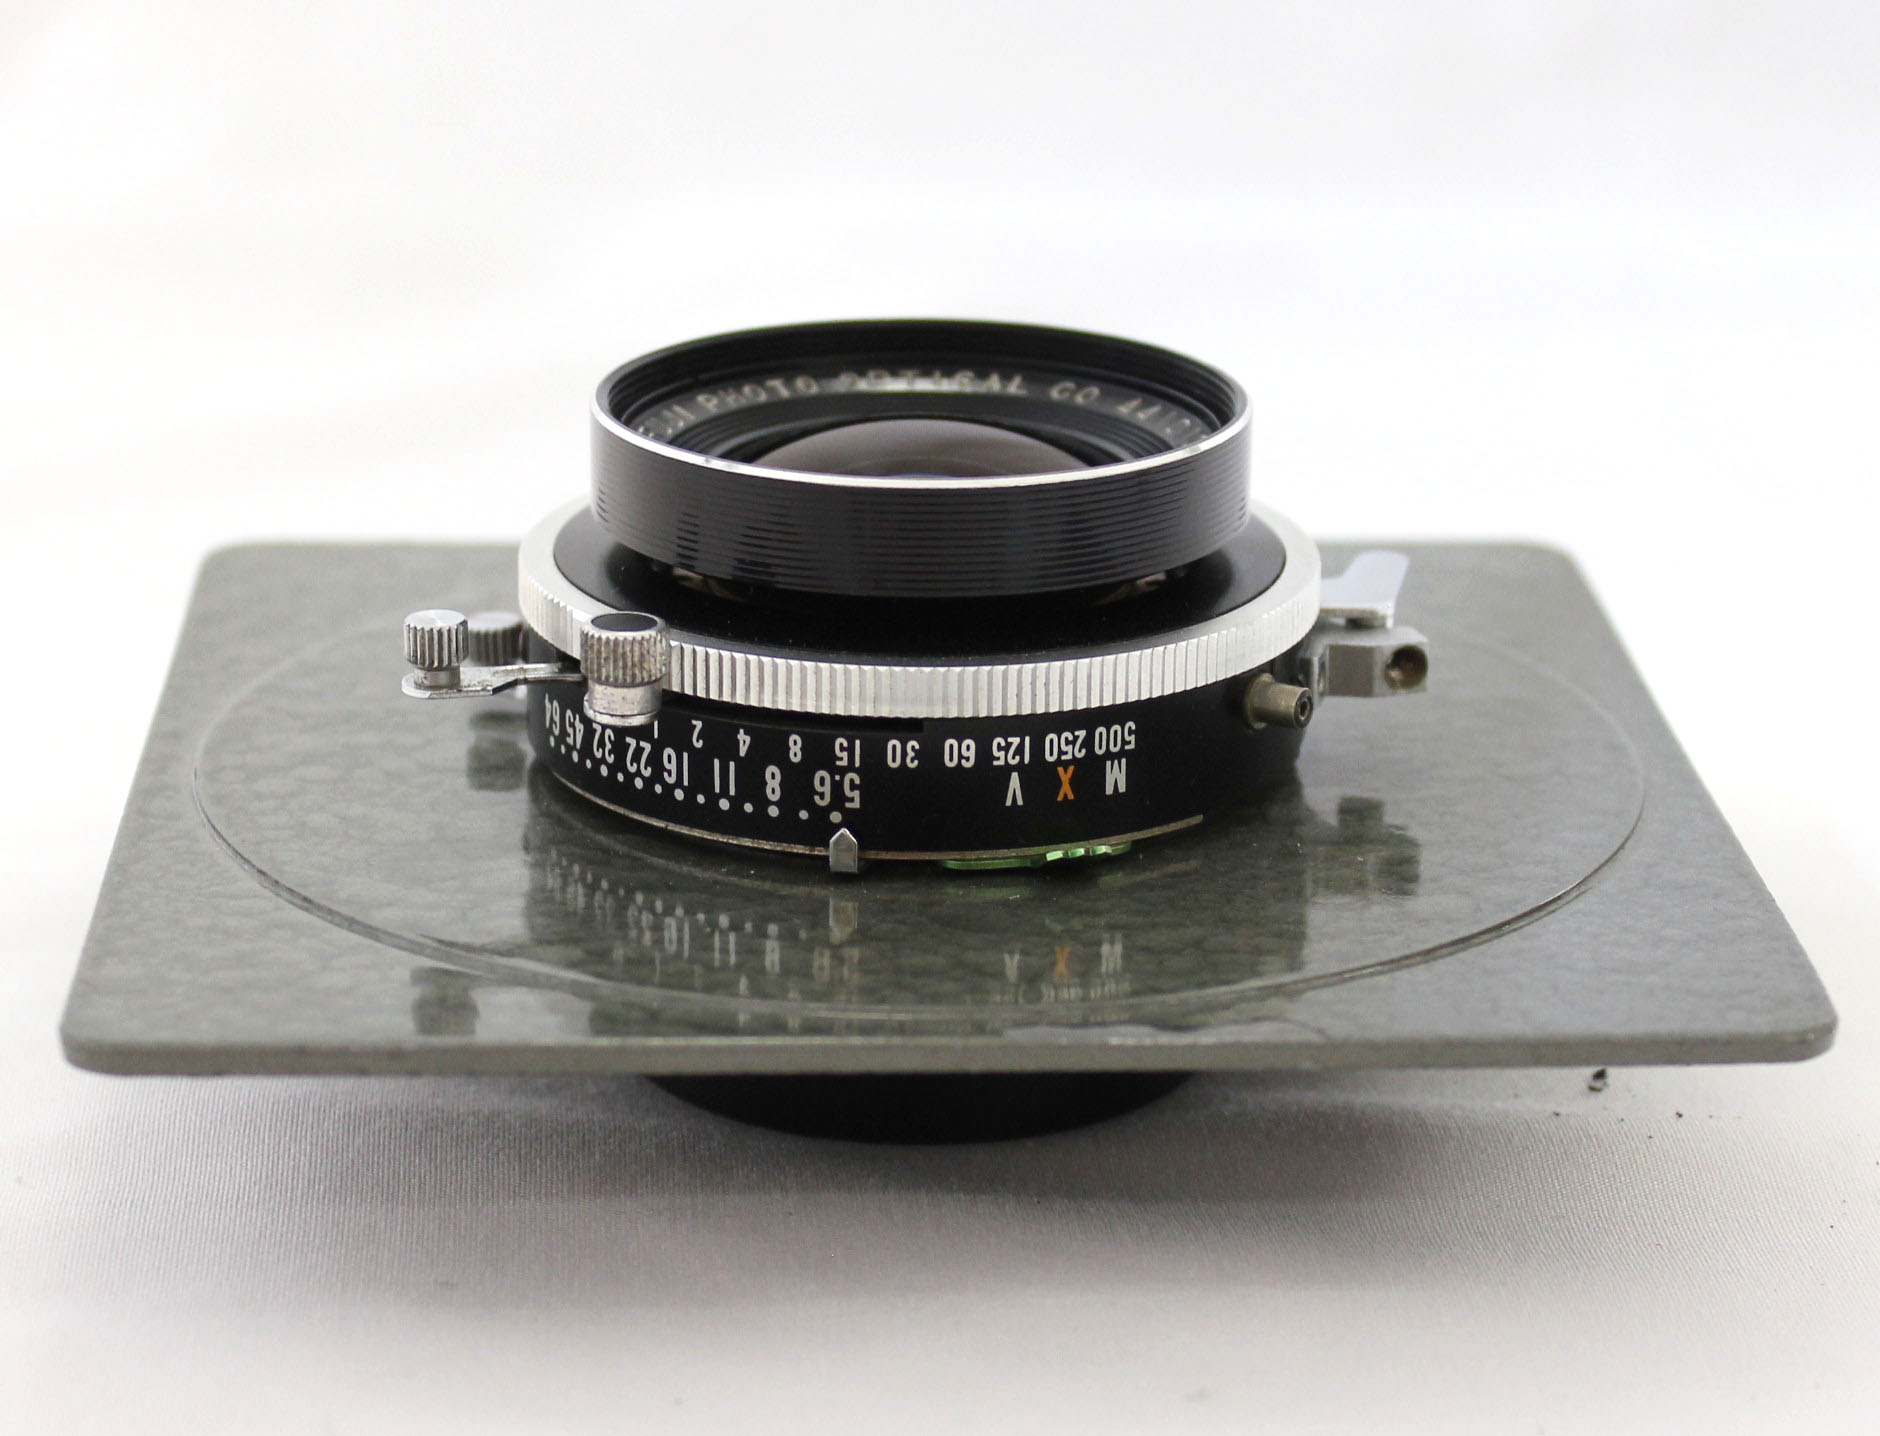 Fuji Fujinon W S 150mm F/5.6 Large Format Lens Seiko Shutter from Japan Photo 2